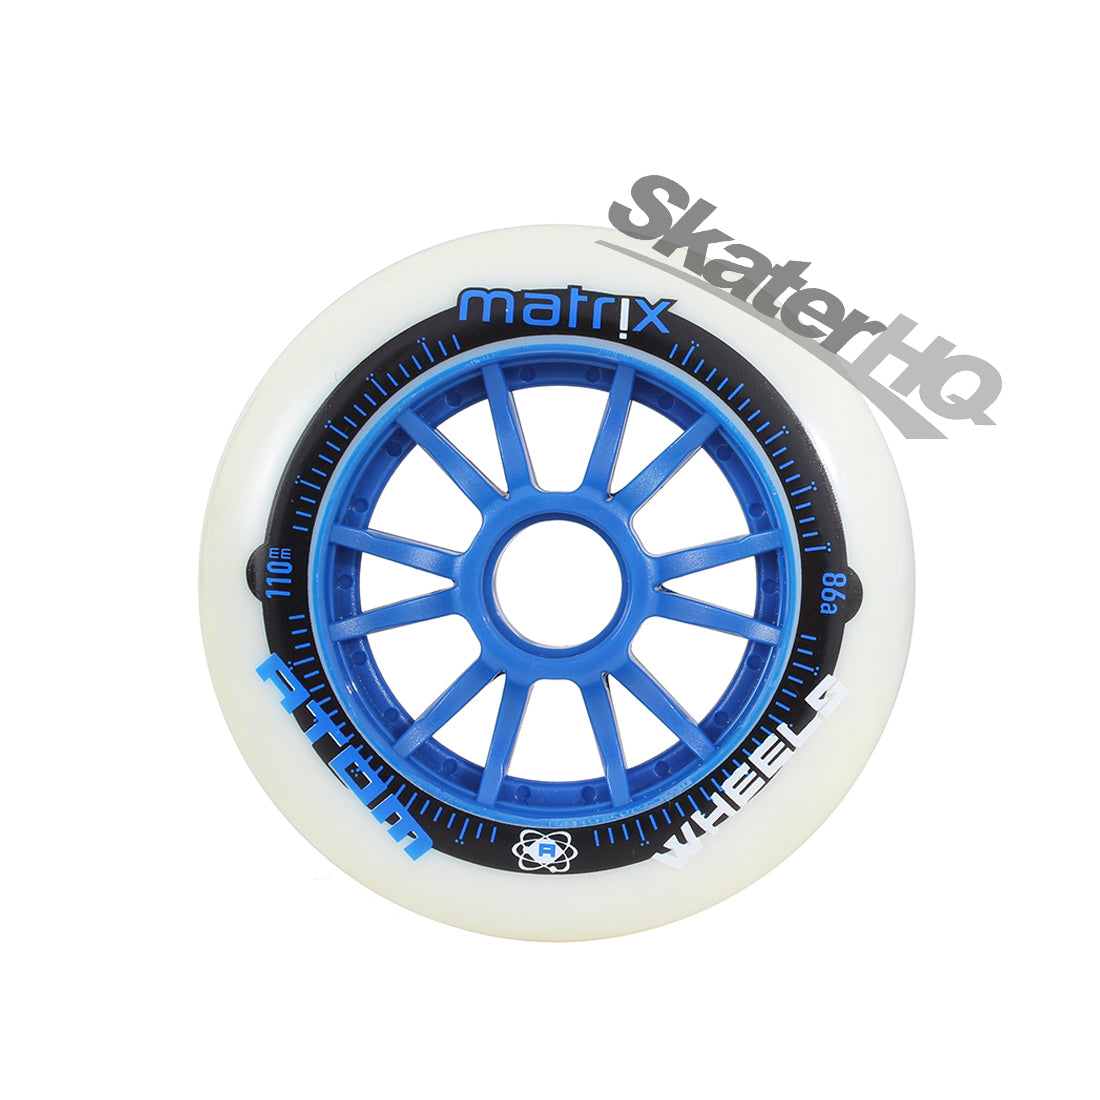 Atom Matrix 110mm 86a Single - White/Blue Inline Rec Wheels